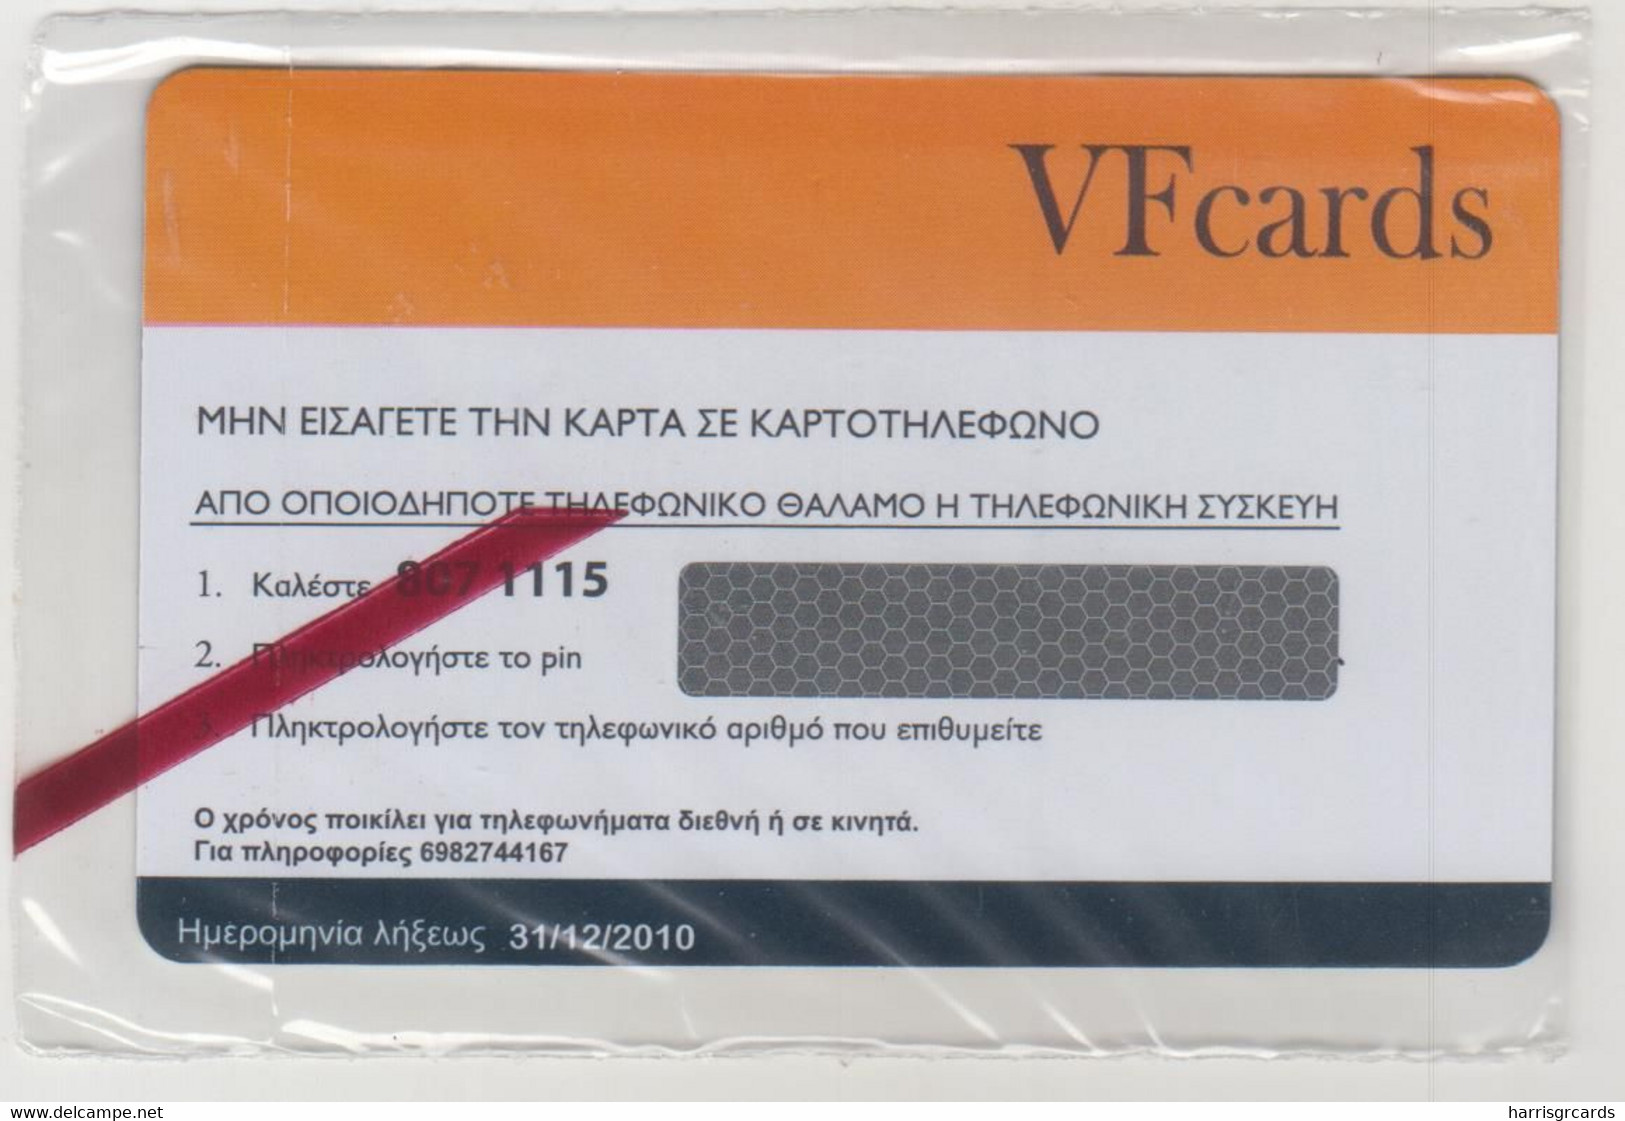 GREECE - Greek Cinema,Set Of 4 VF Promotion Prepaid Cards(Sample),tirage 450,e.d 31/12/10,mint - Grèce